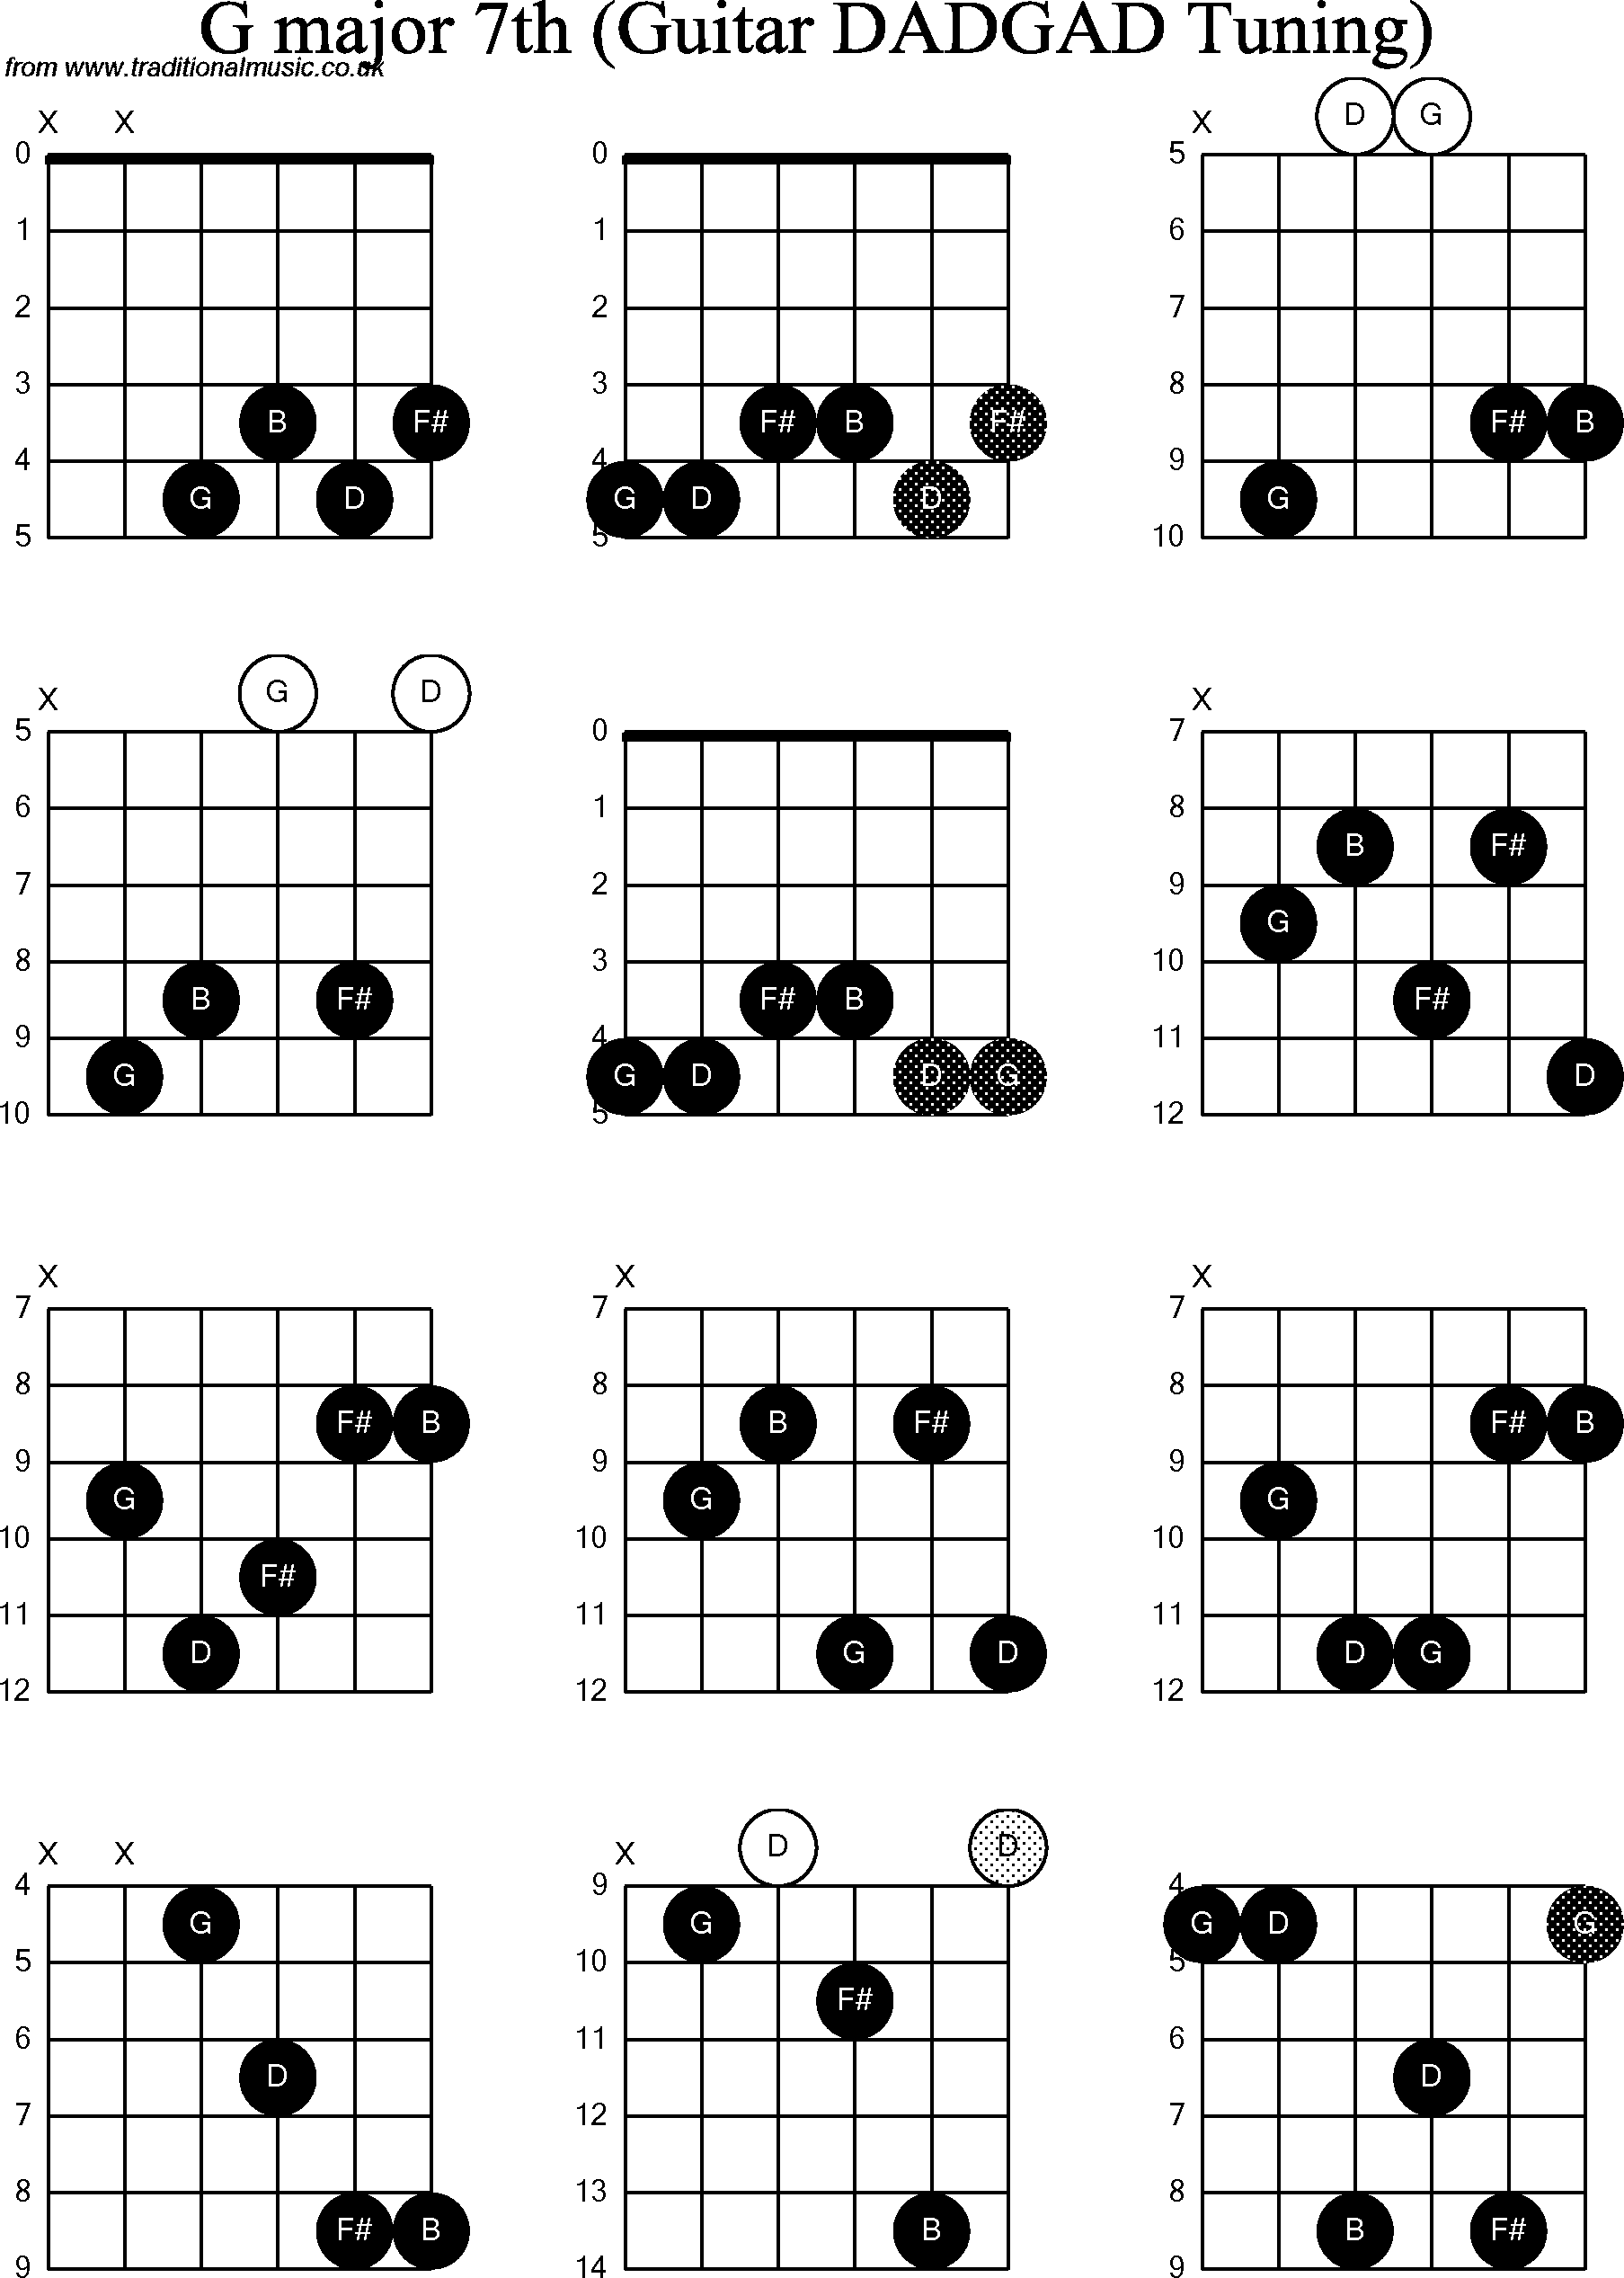 Chord Diagrams for D Modal Guitar(DADGAD), G Major7th